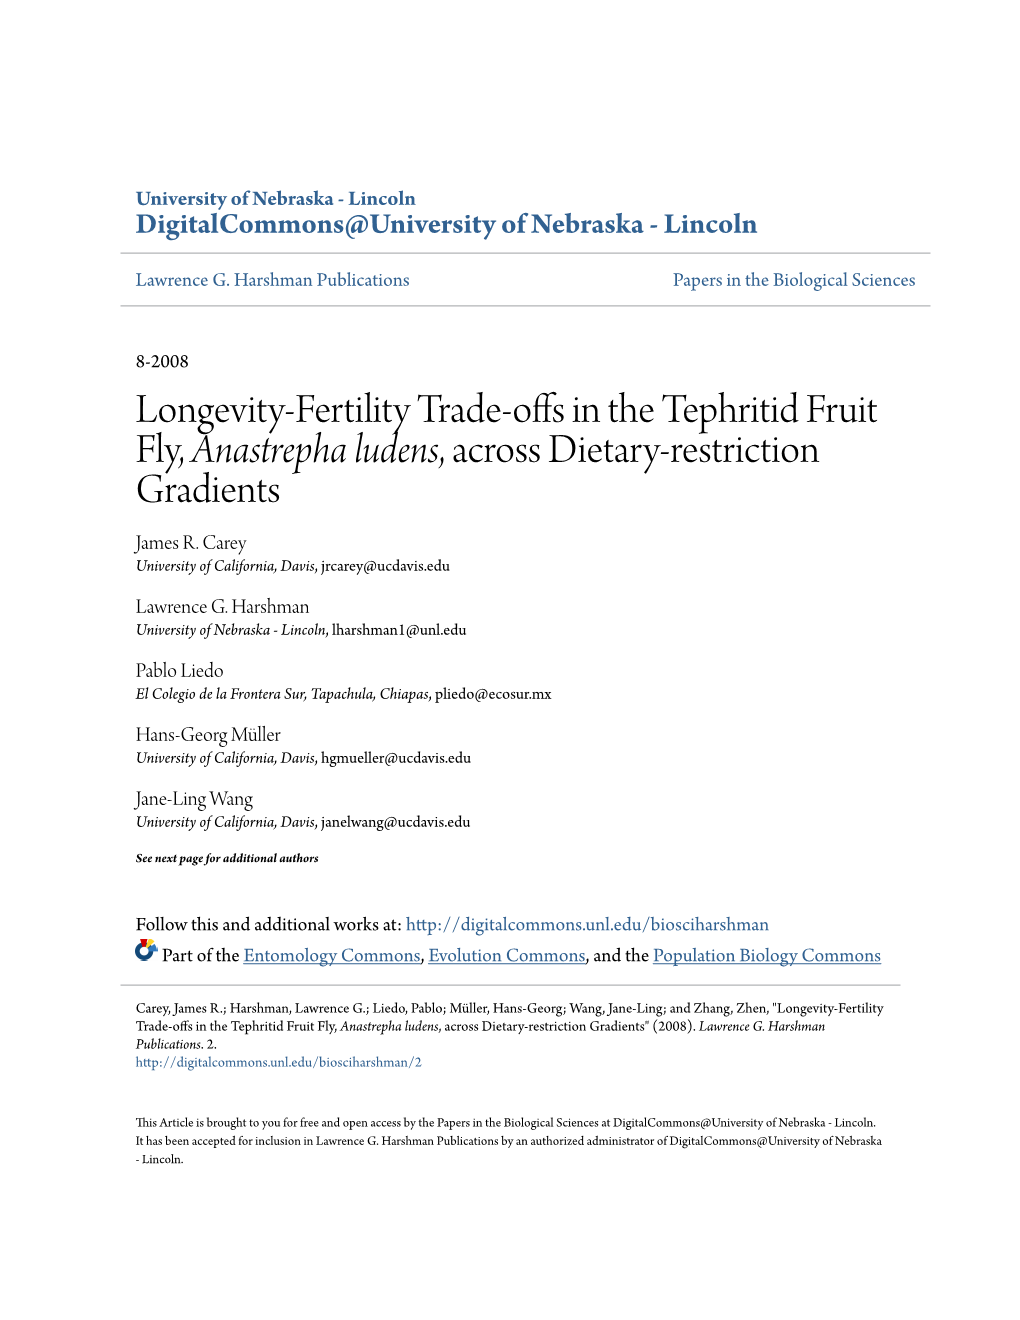 Longevity-Fertility Trade-Offs in the Tephritid Fruit Fly, &lt;I&gt;Anastrepha